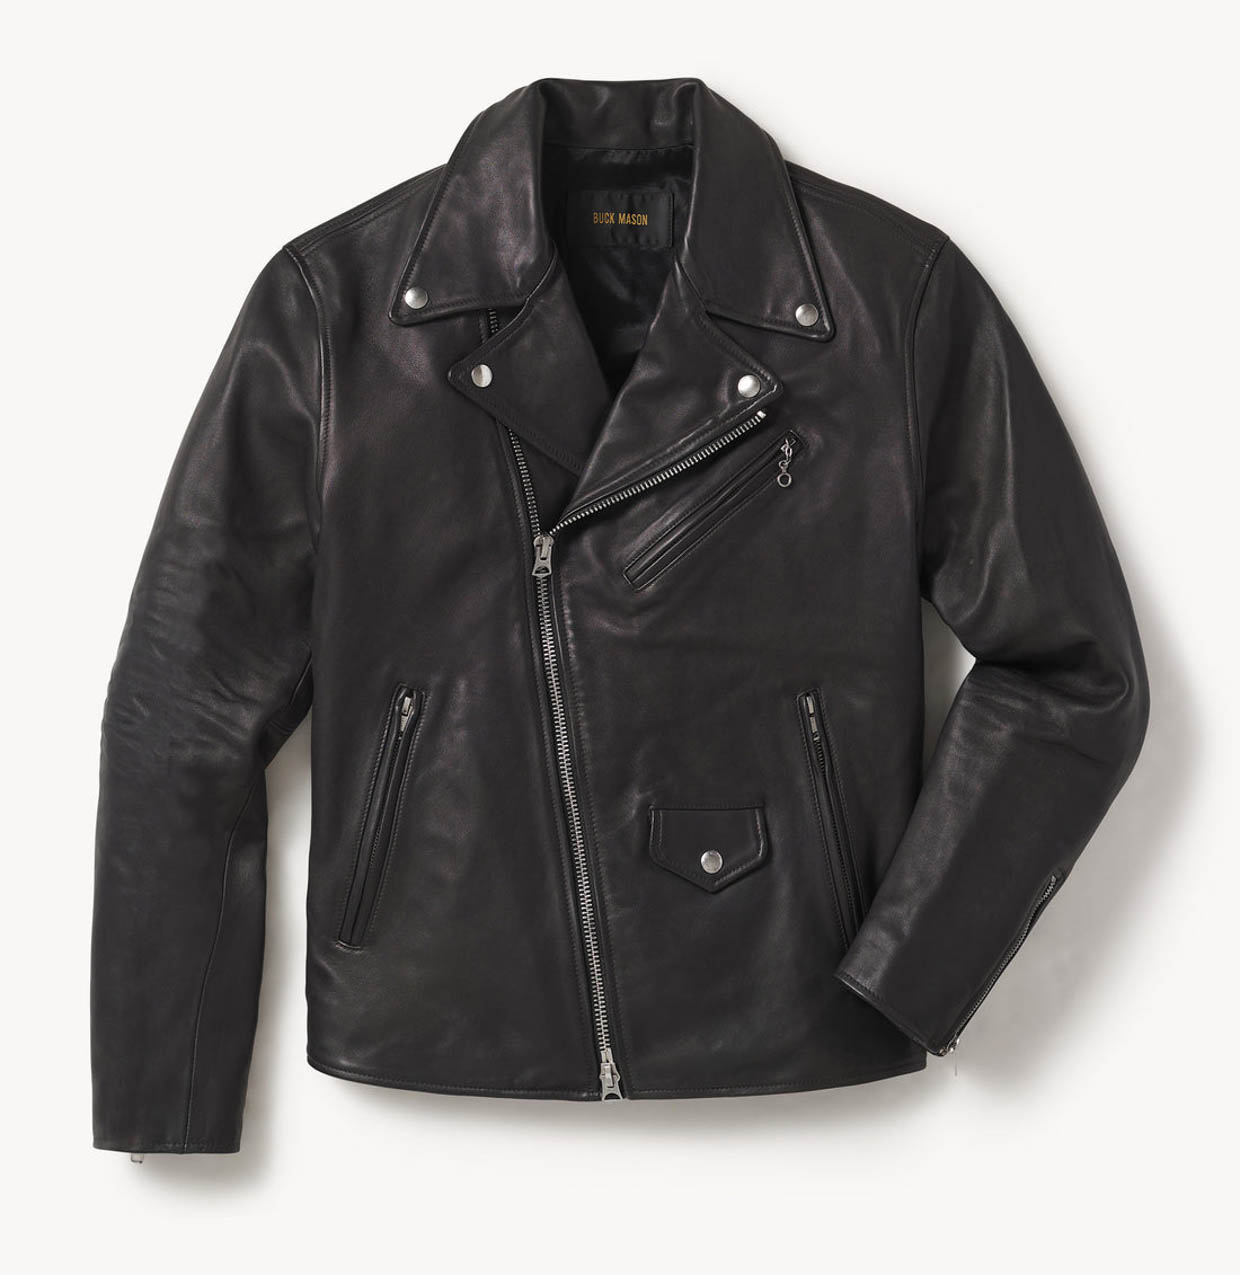 Buck Mason Bruiser Leather Moto Jacket